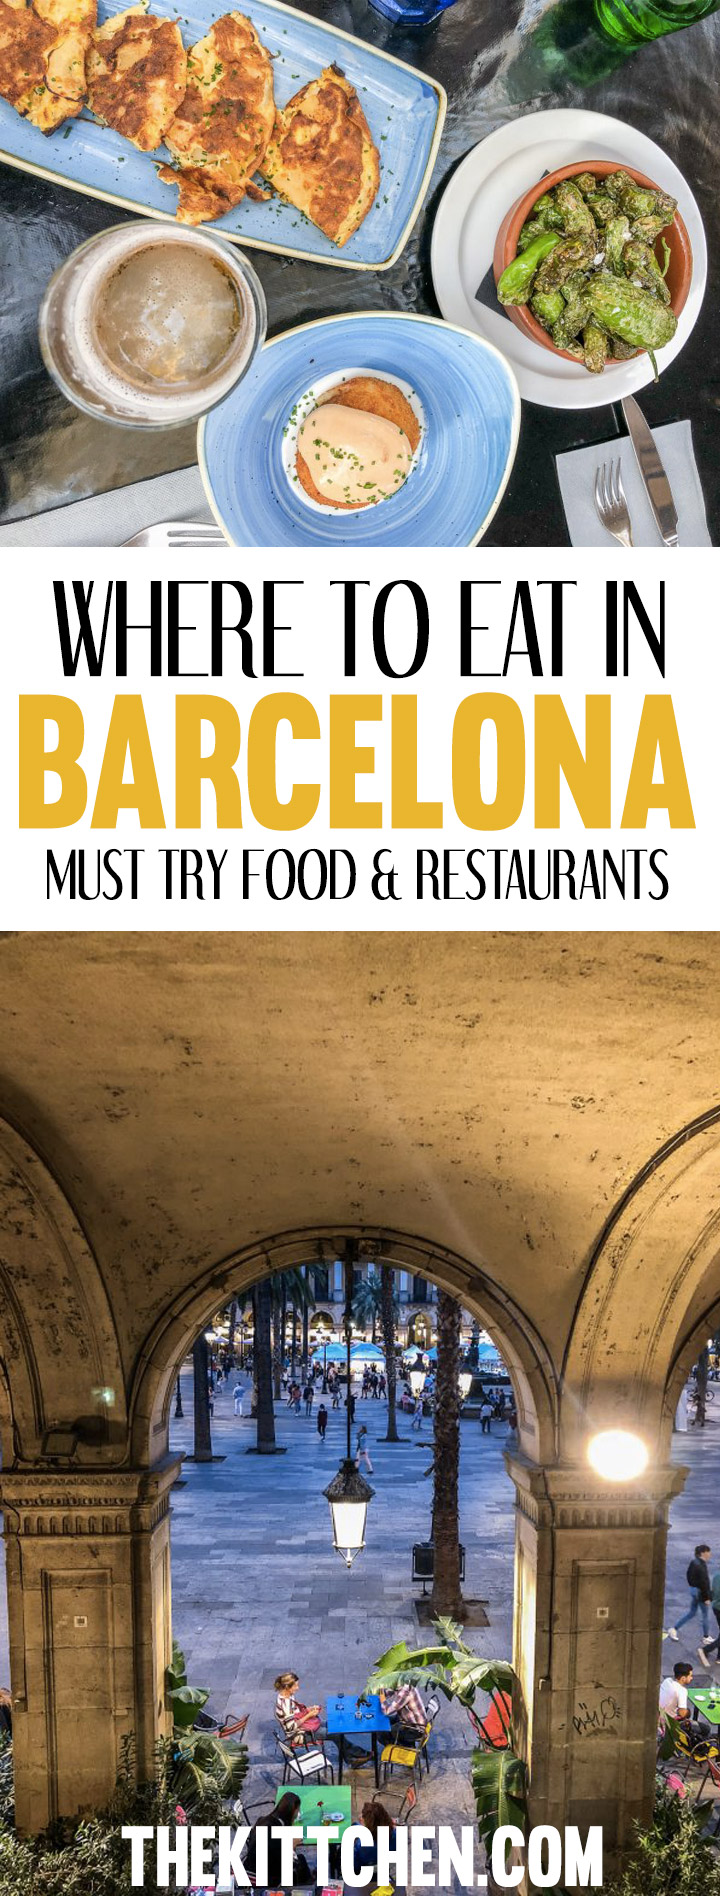 Where to Eat in Barcelona - thekittchen